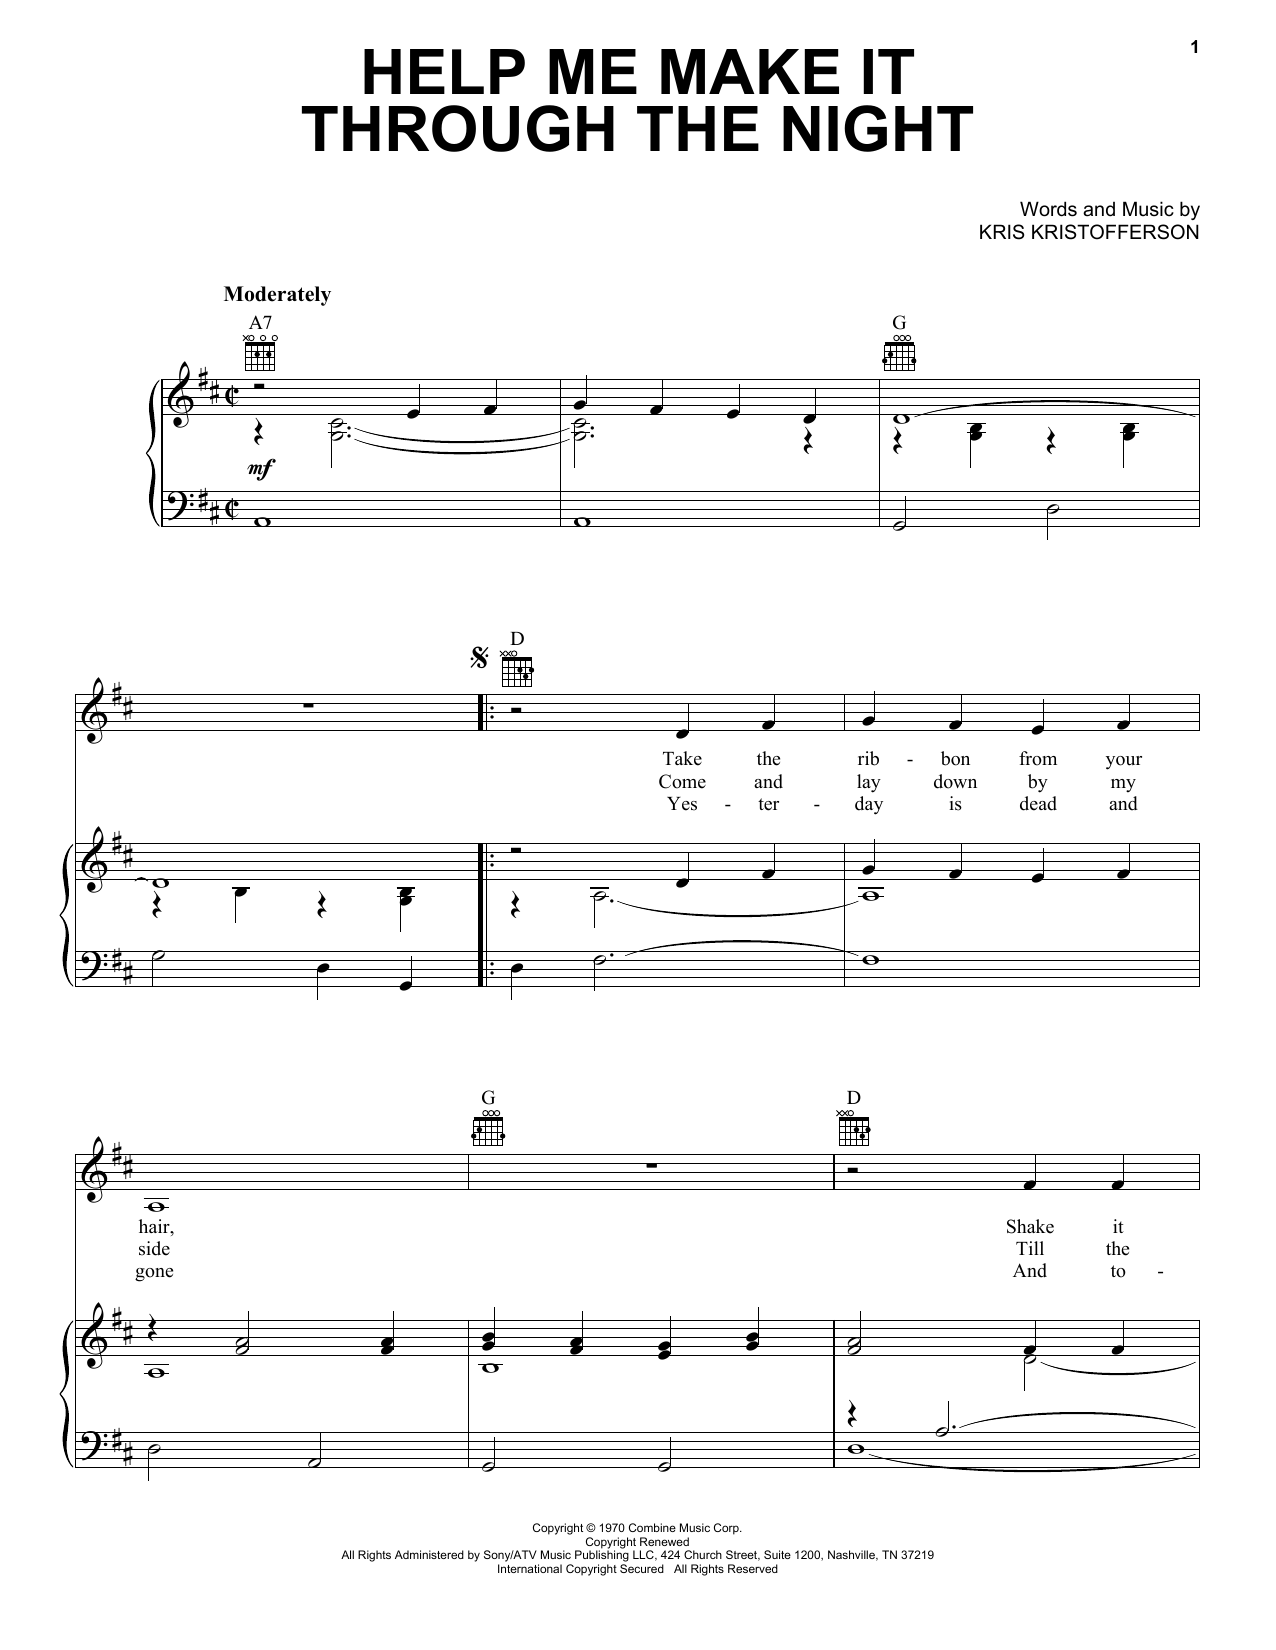 Kris Kristofferson Help Me Make It Through The Night Sheet Music Notes & Chords for Guitar Tab - Download or Print PDF